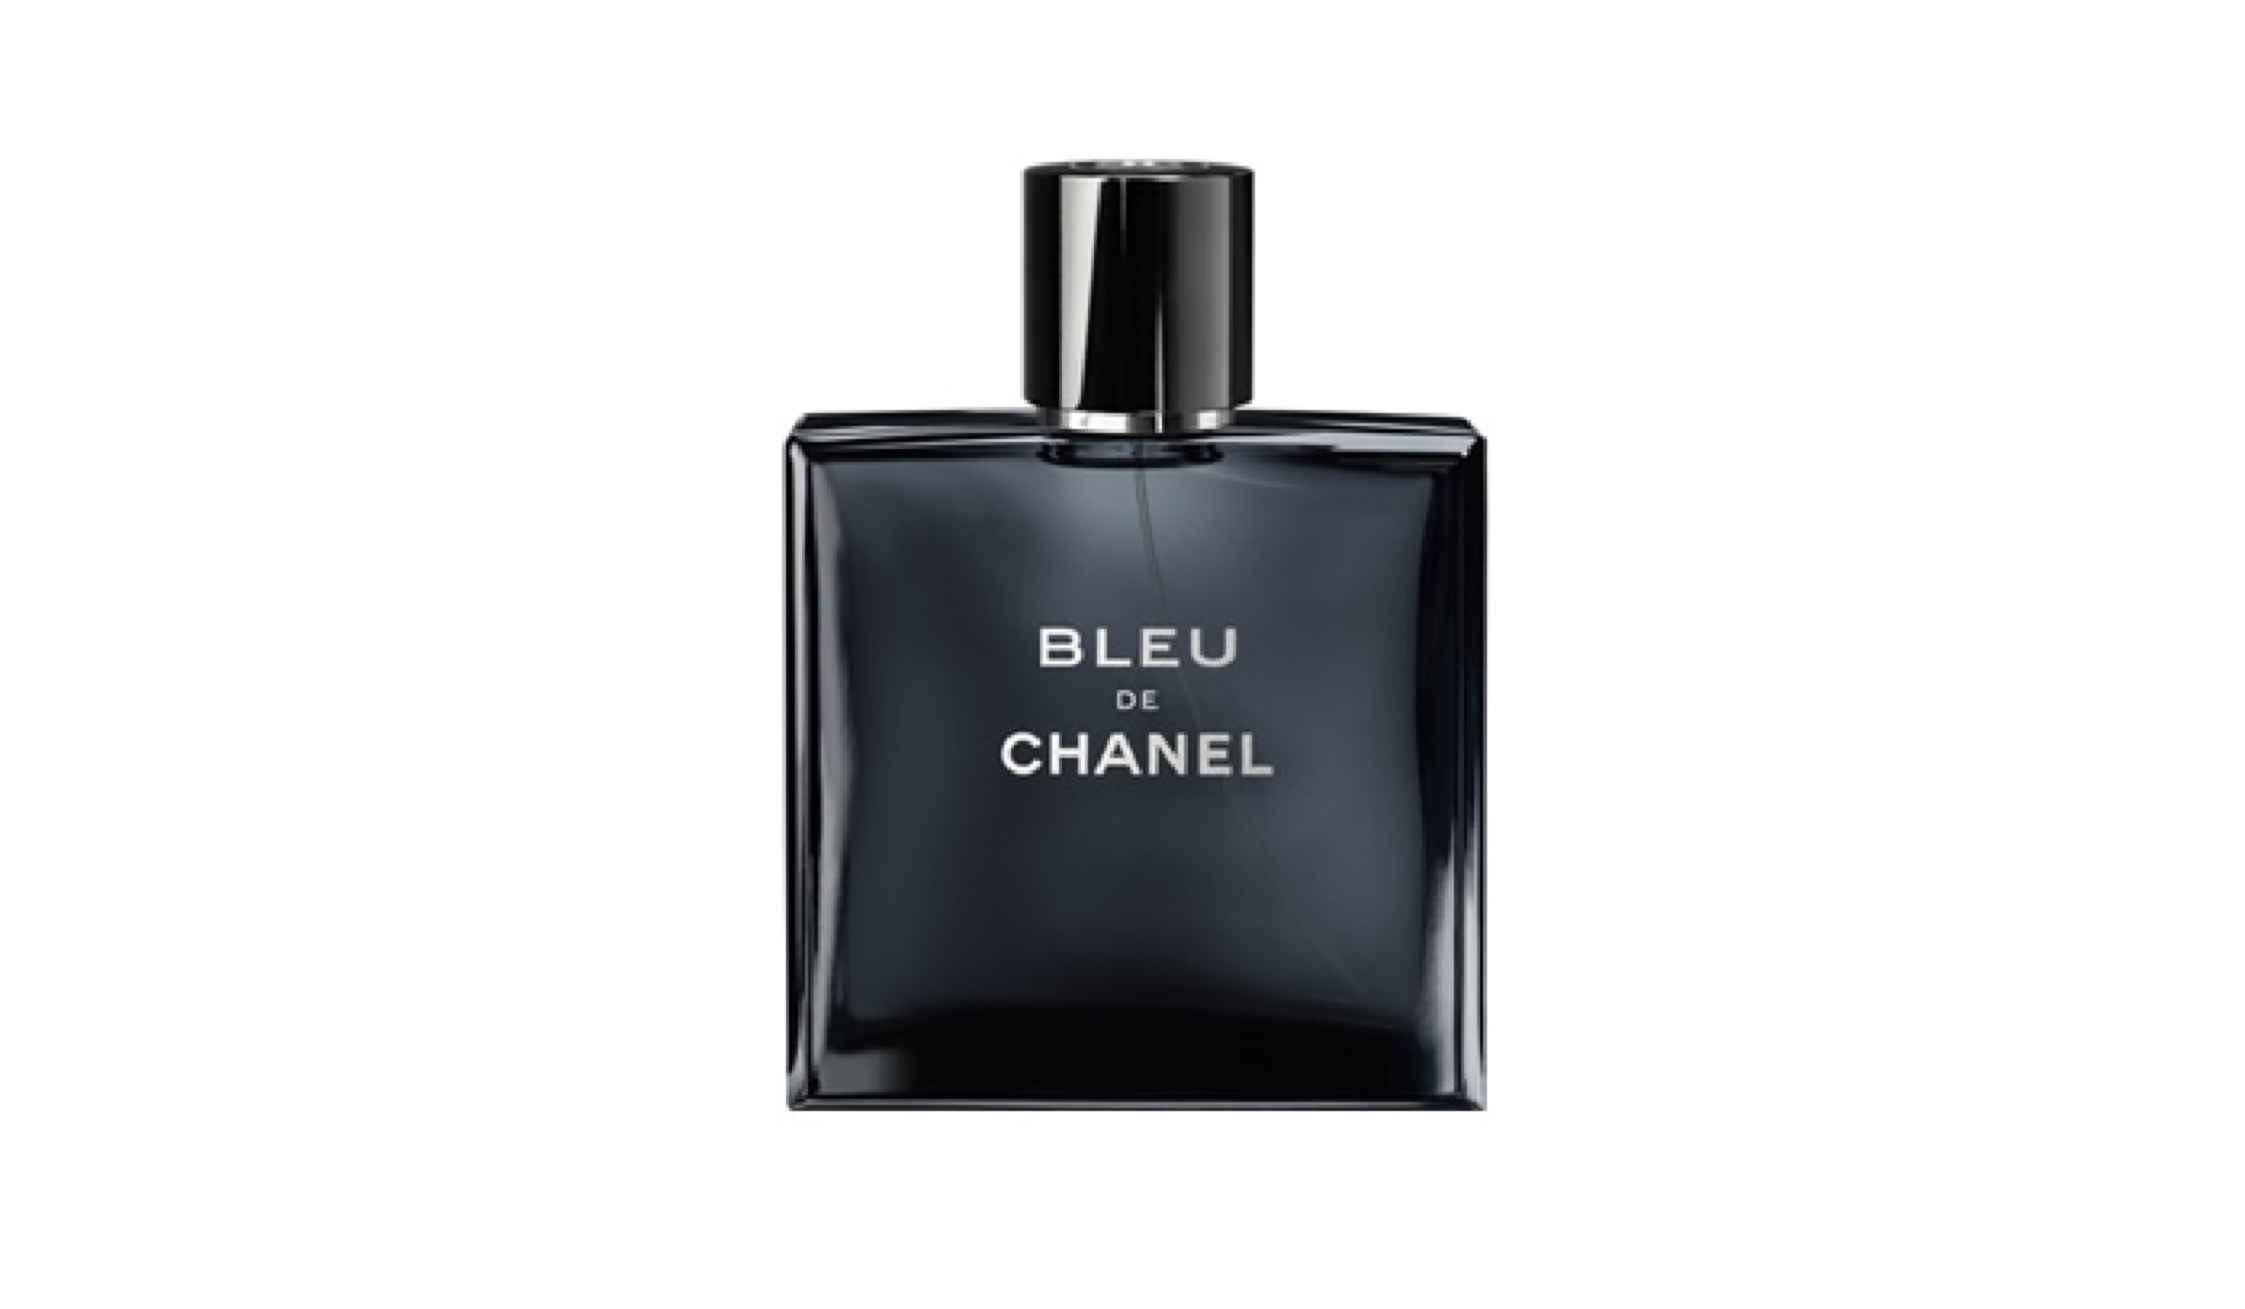 Chanel Bleu De Chanel edp 50ml Best Price  Compare deals at PriceSpy UK